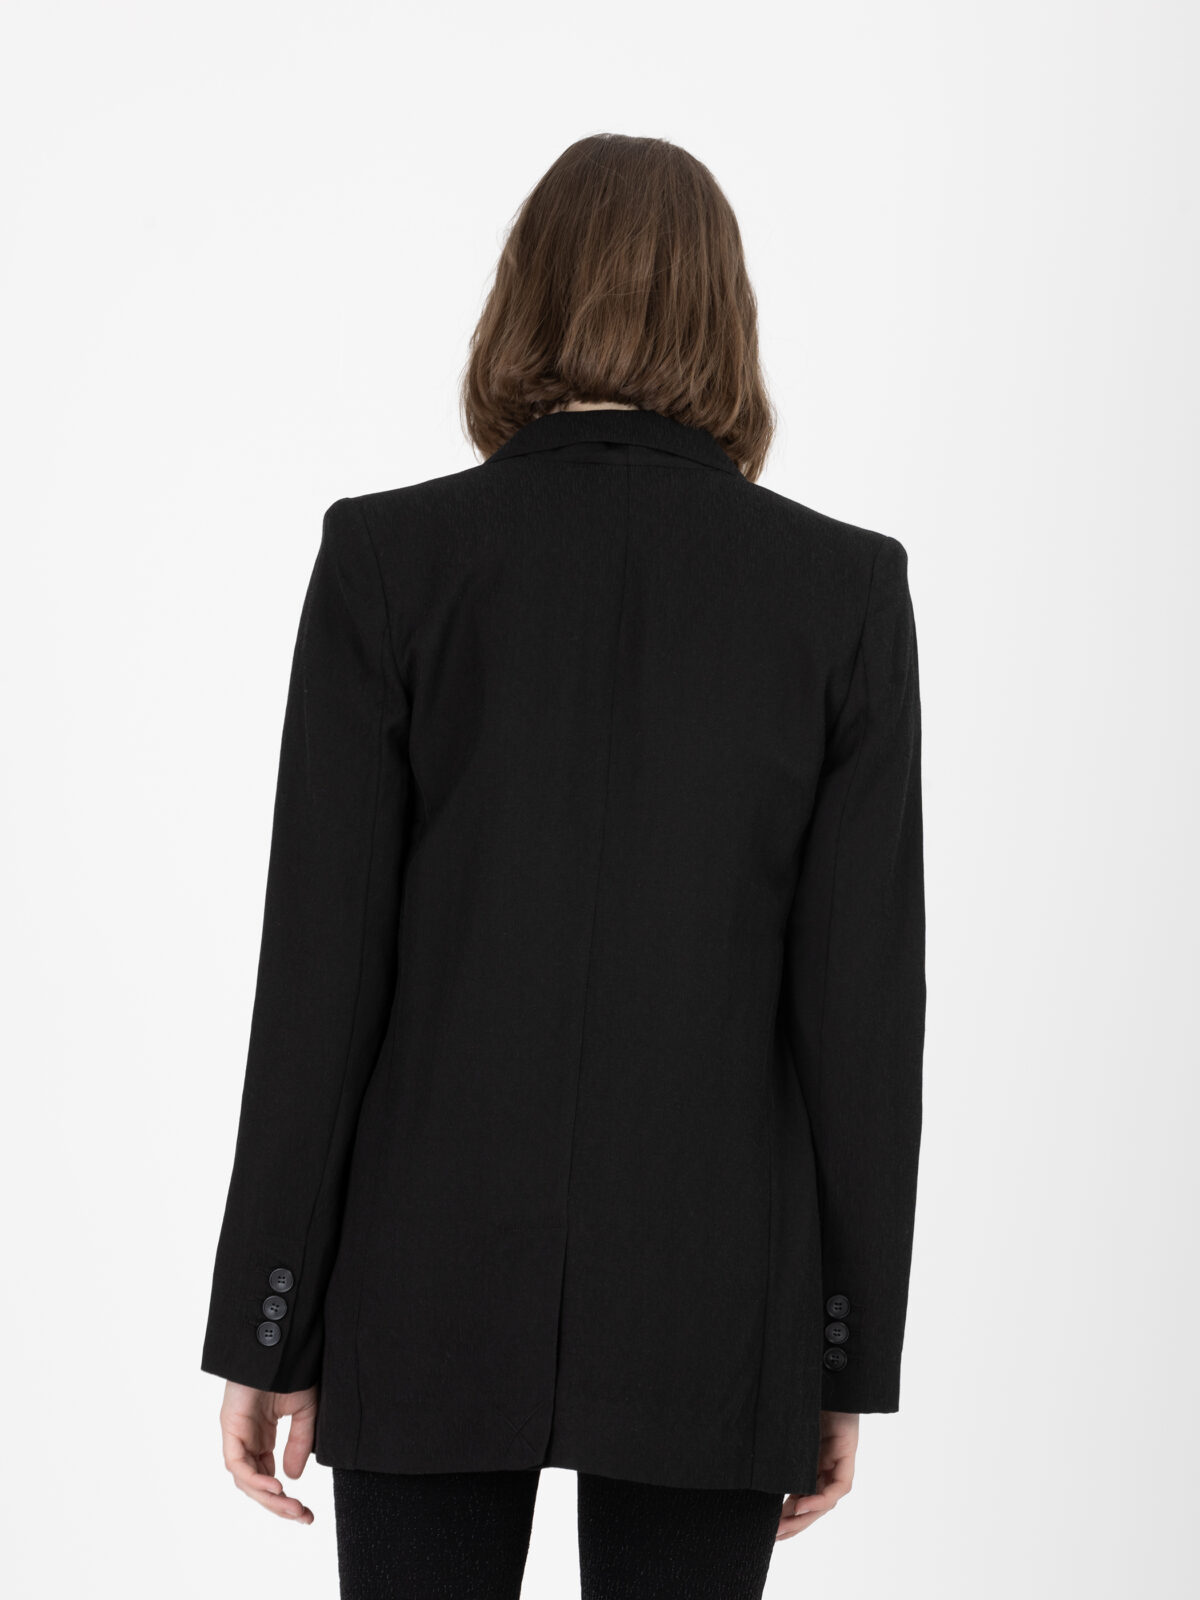 tilia-suit-black-jacket-linen-vanessa-bruno-matchboxathens